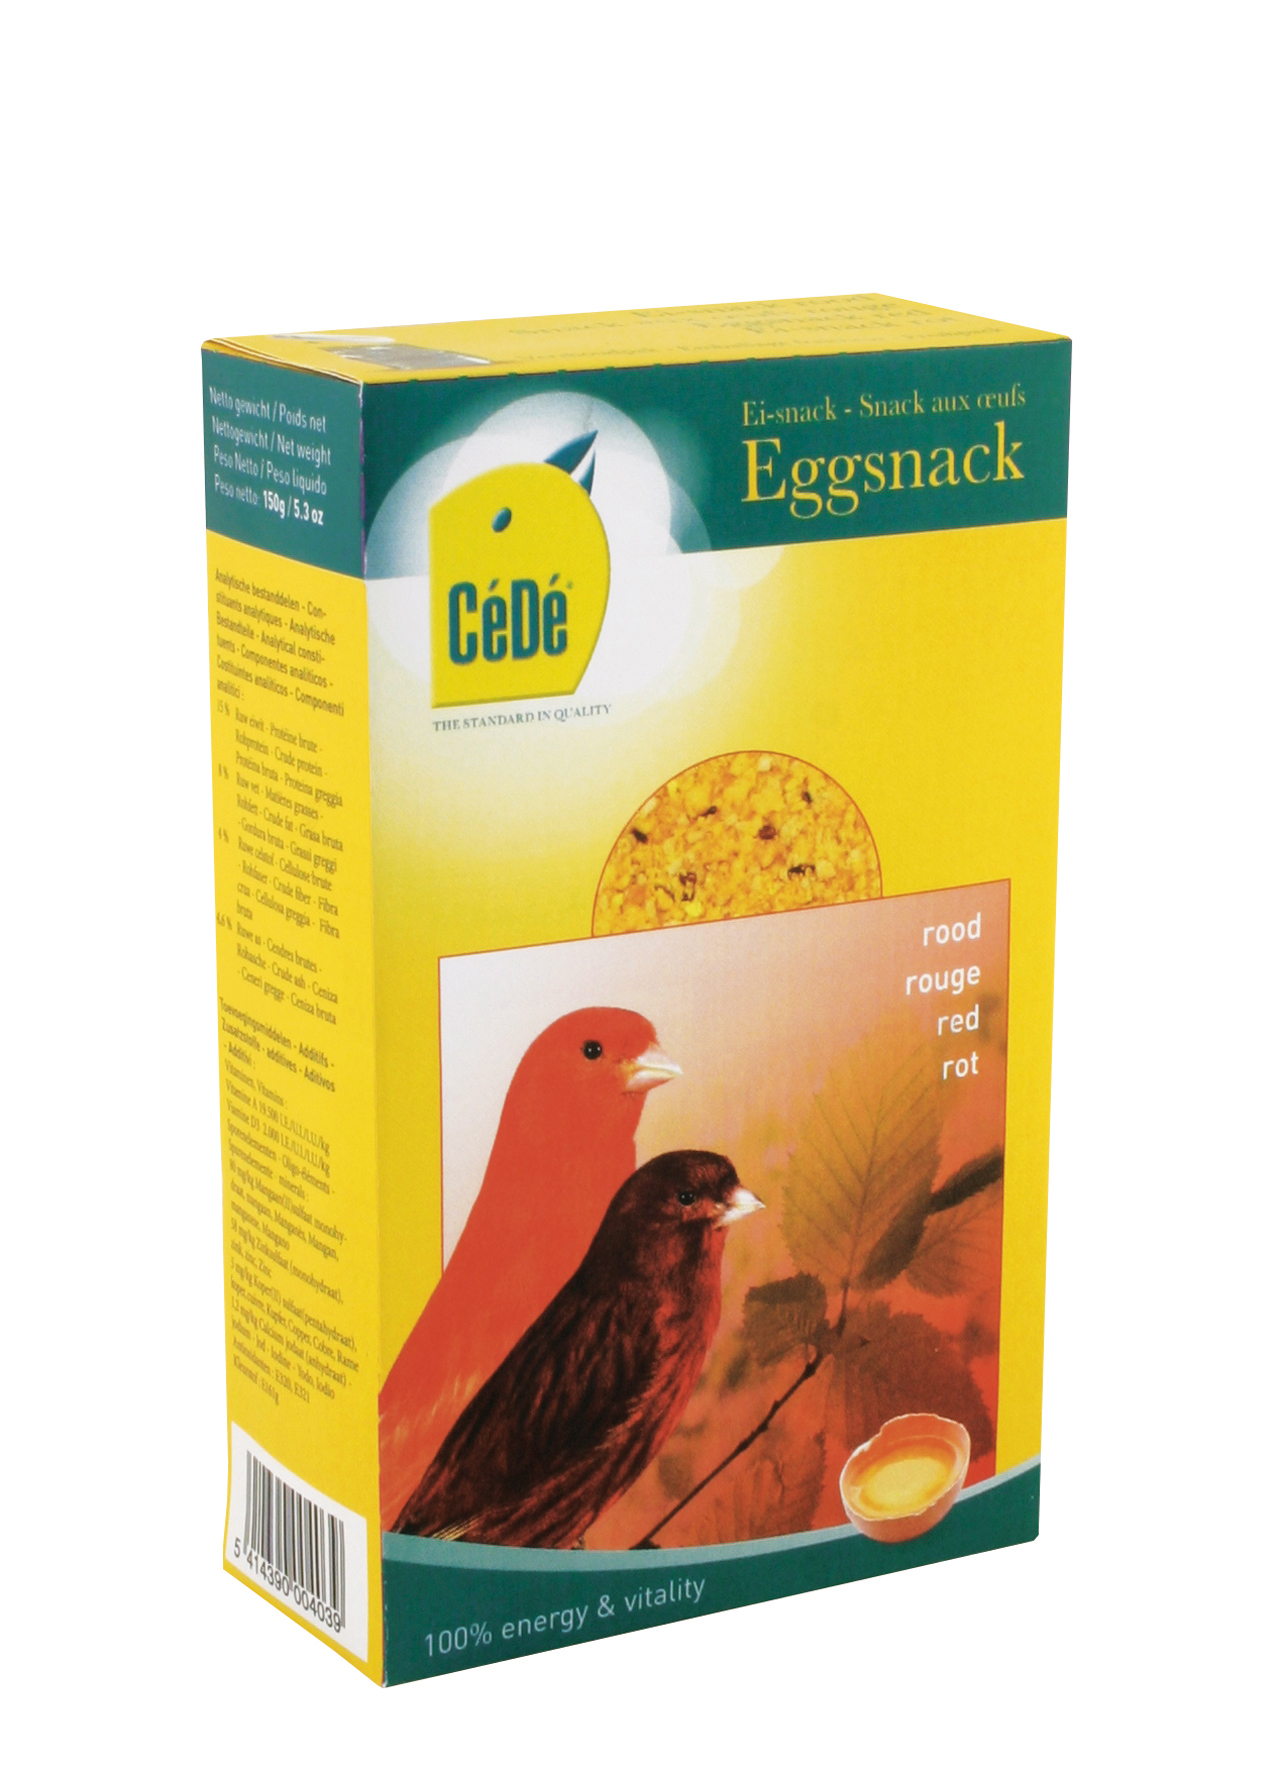 Cédé egg snack red - Product shot